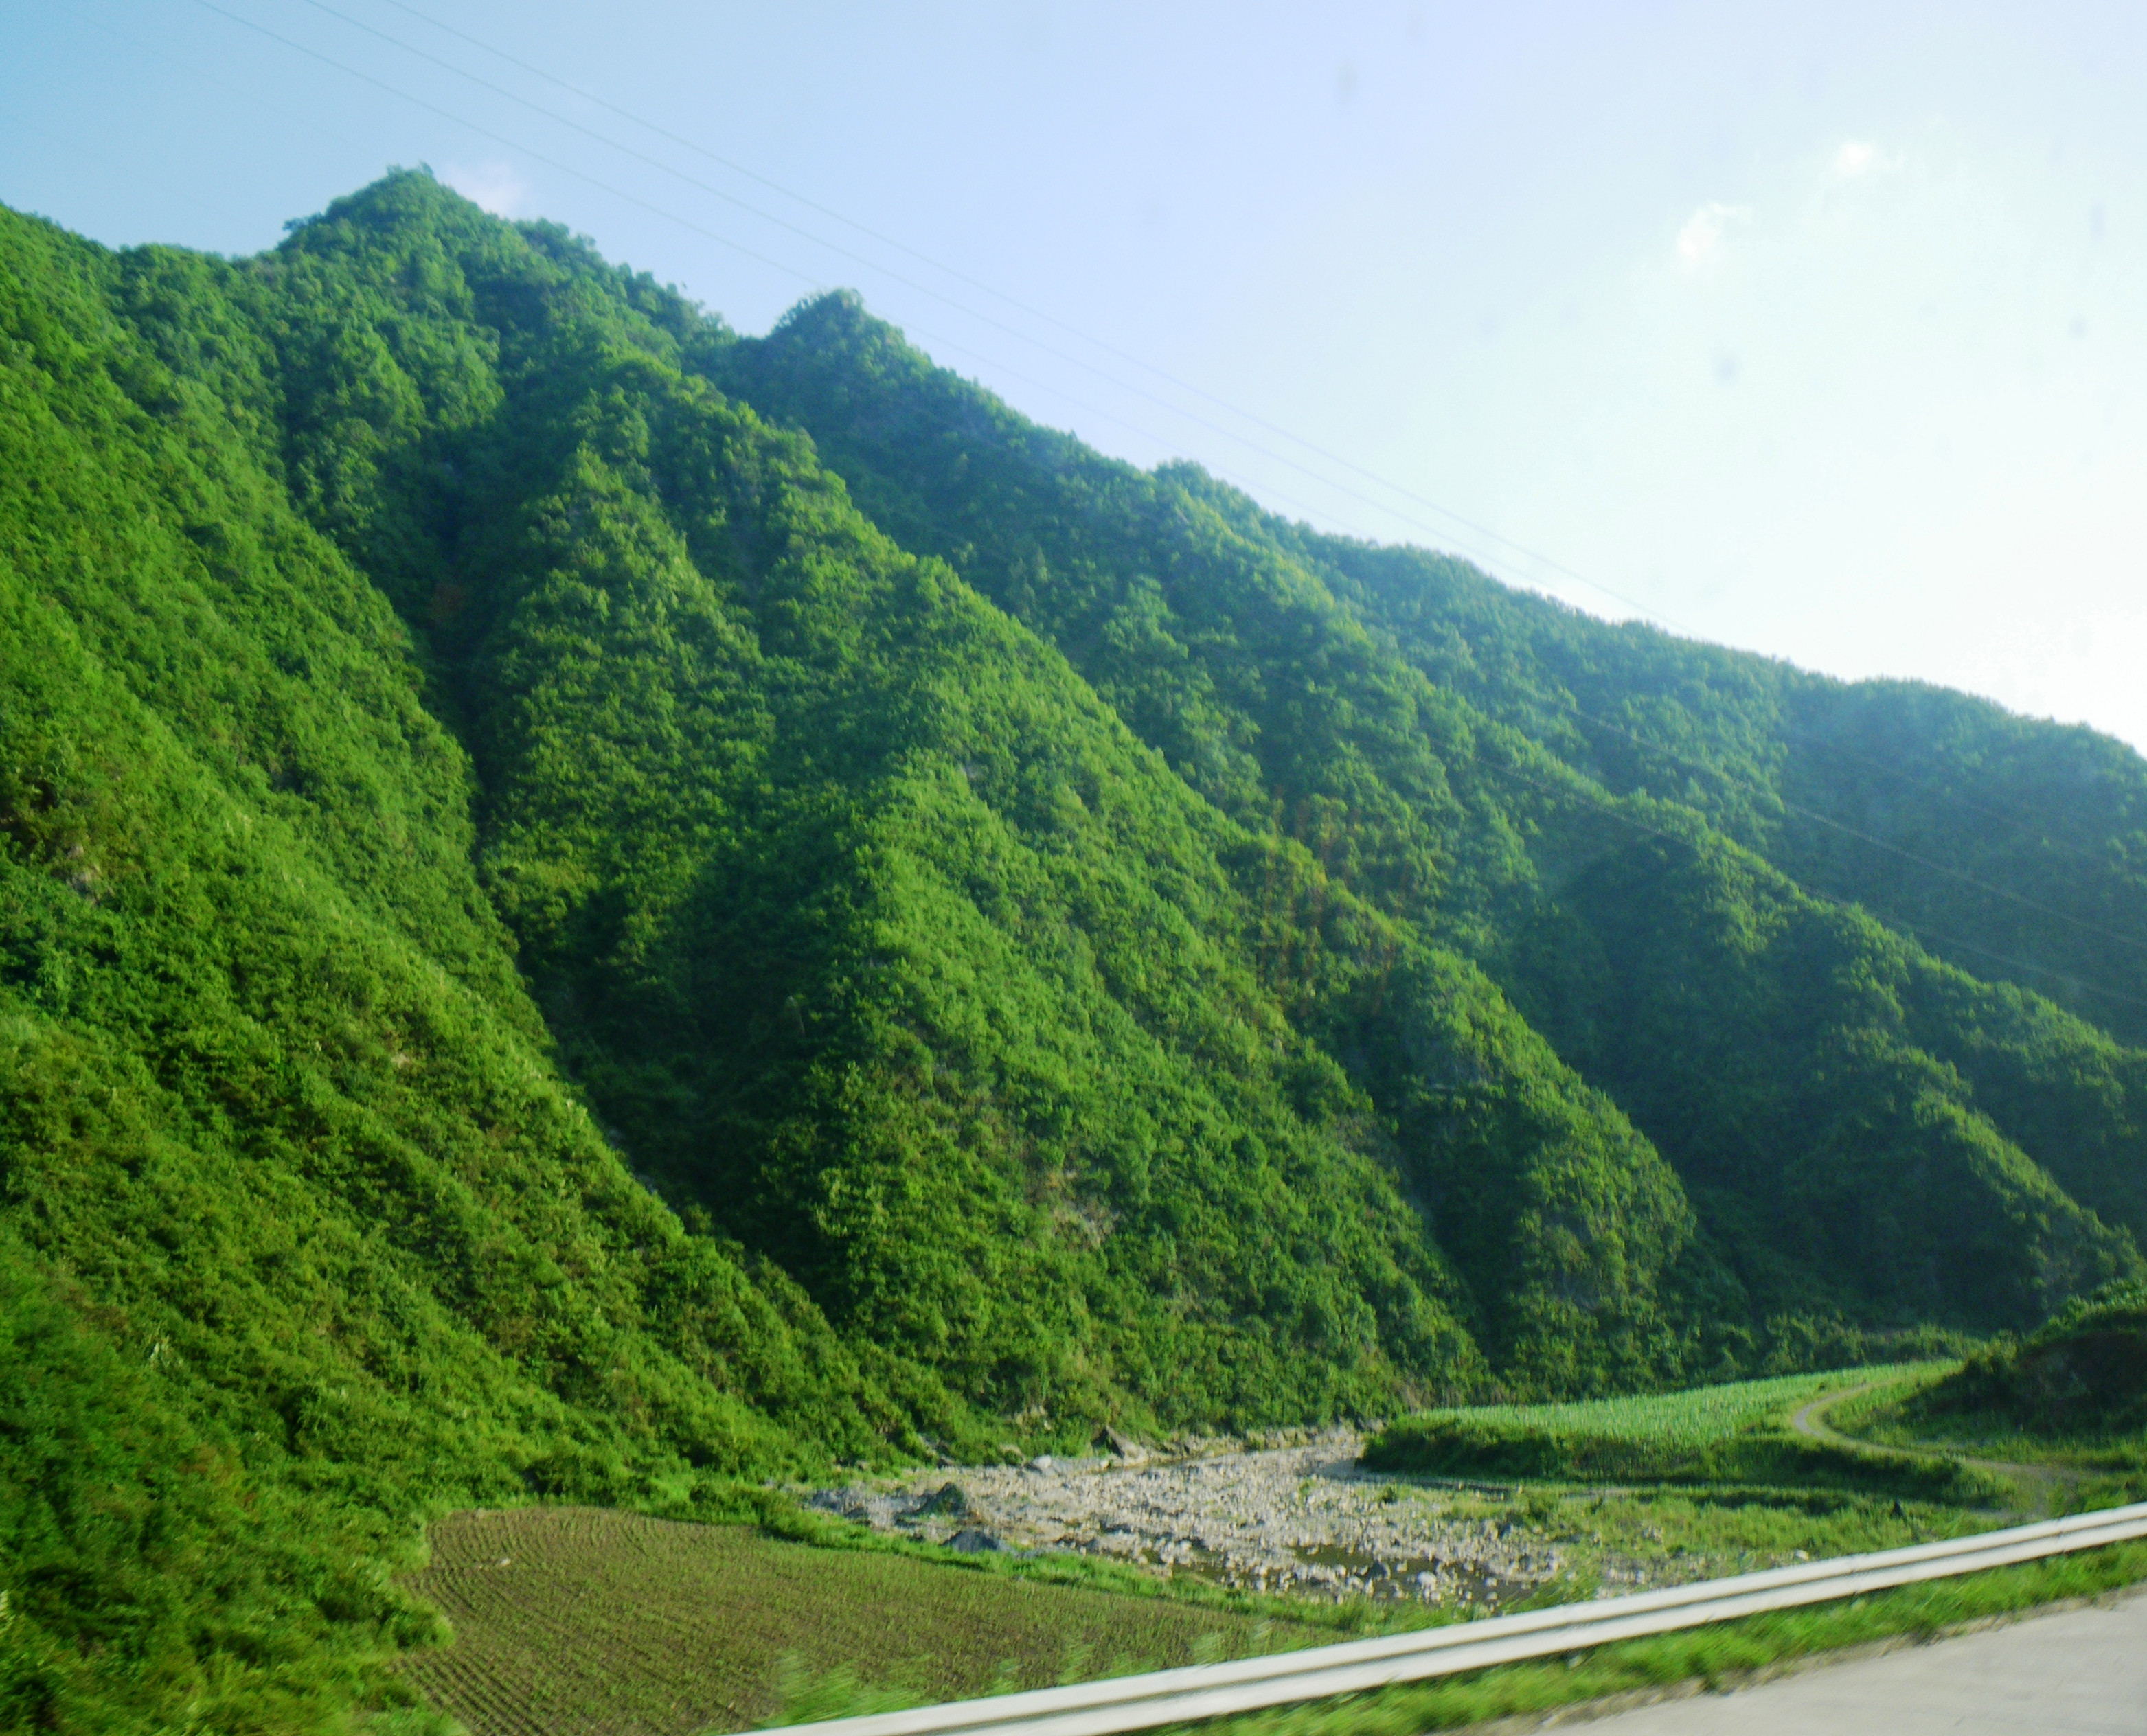 Best ideas about North Korea Landscape
. Save or Pin Beautiful mountain landscape in North Korea’s mountainous Now.